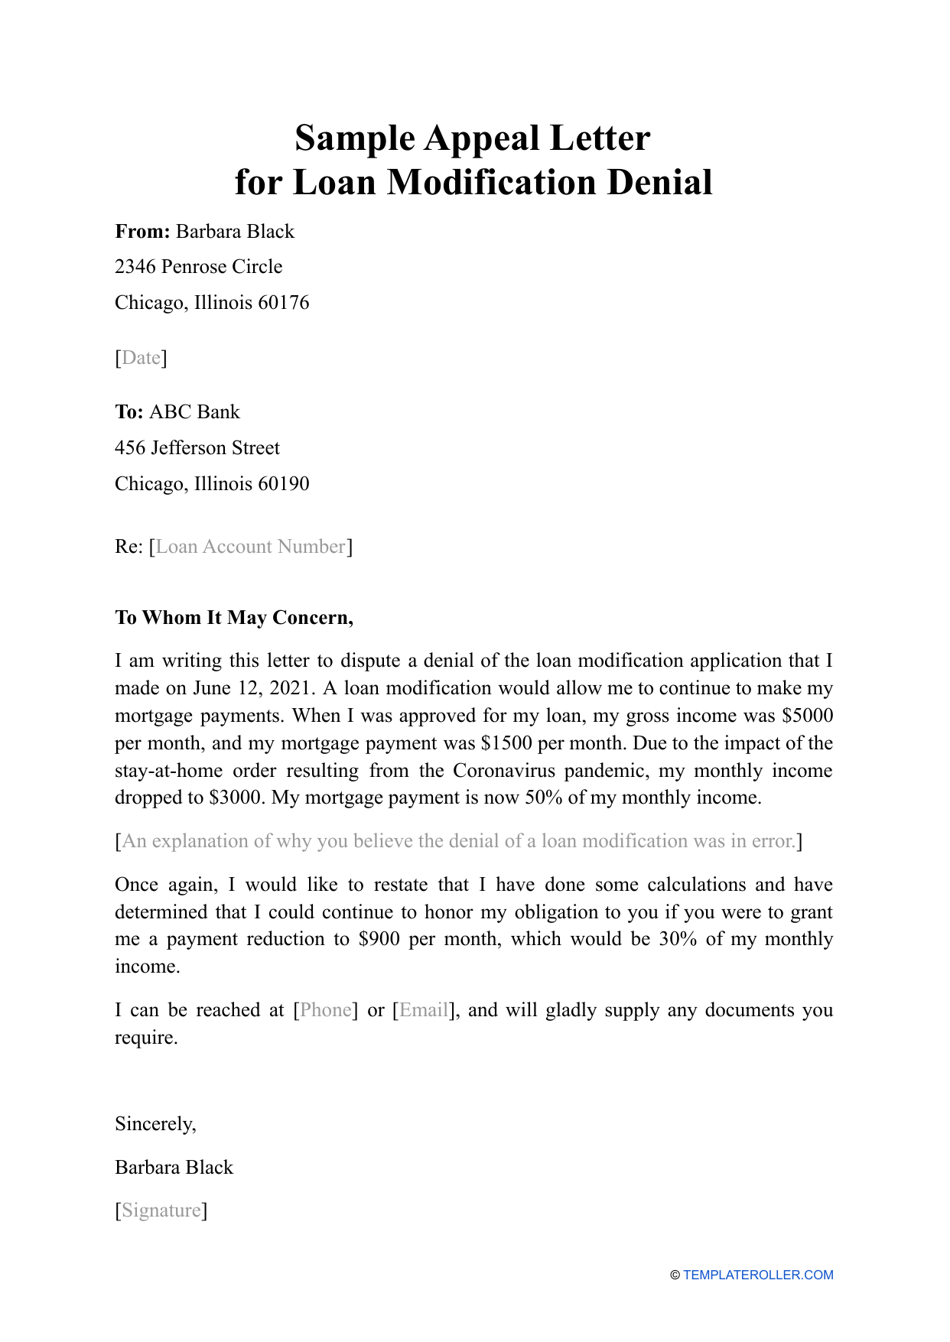 Sample Appeal Letter for Loan Modification Denial Download Printable